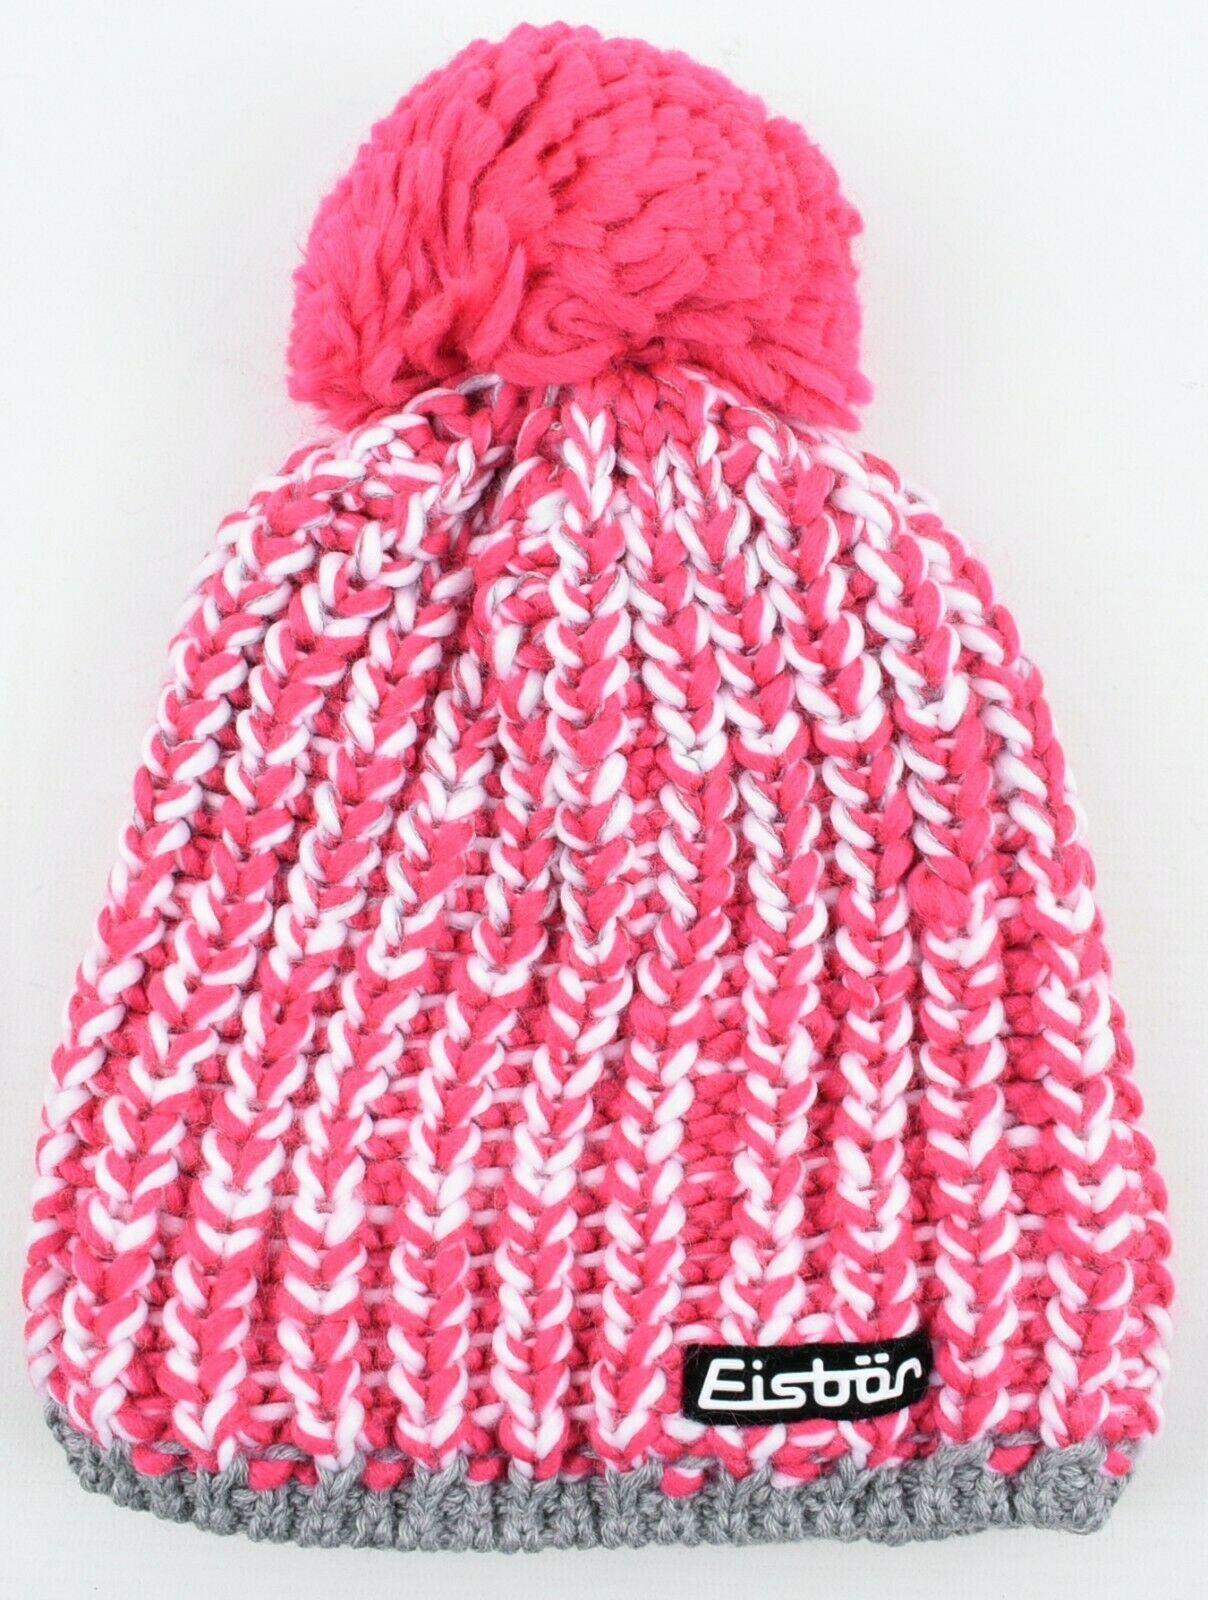 EISBAR Women's KLIO Ski Winter Merino Wool Bobble Beanie Hat, Pink/White